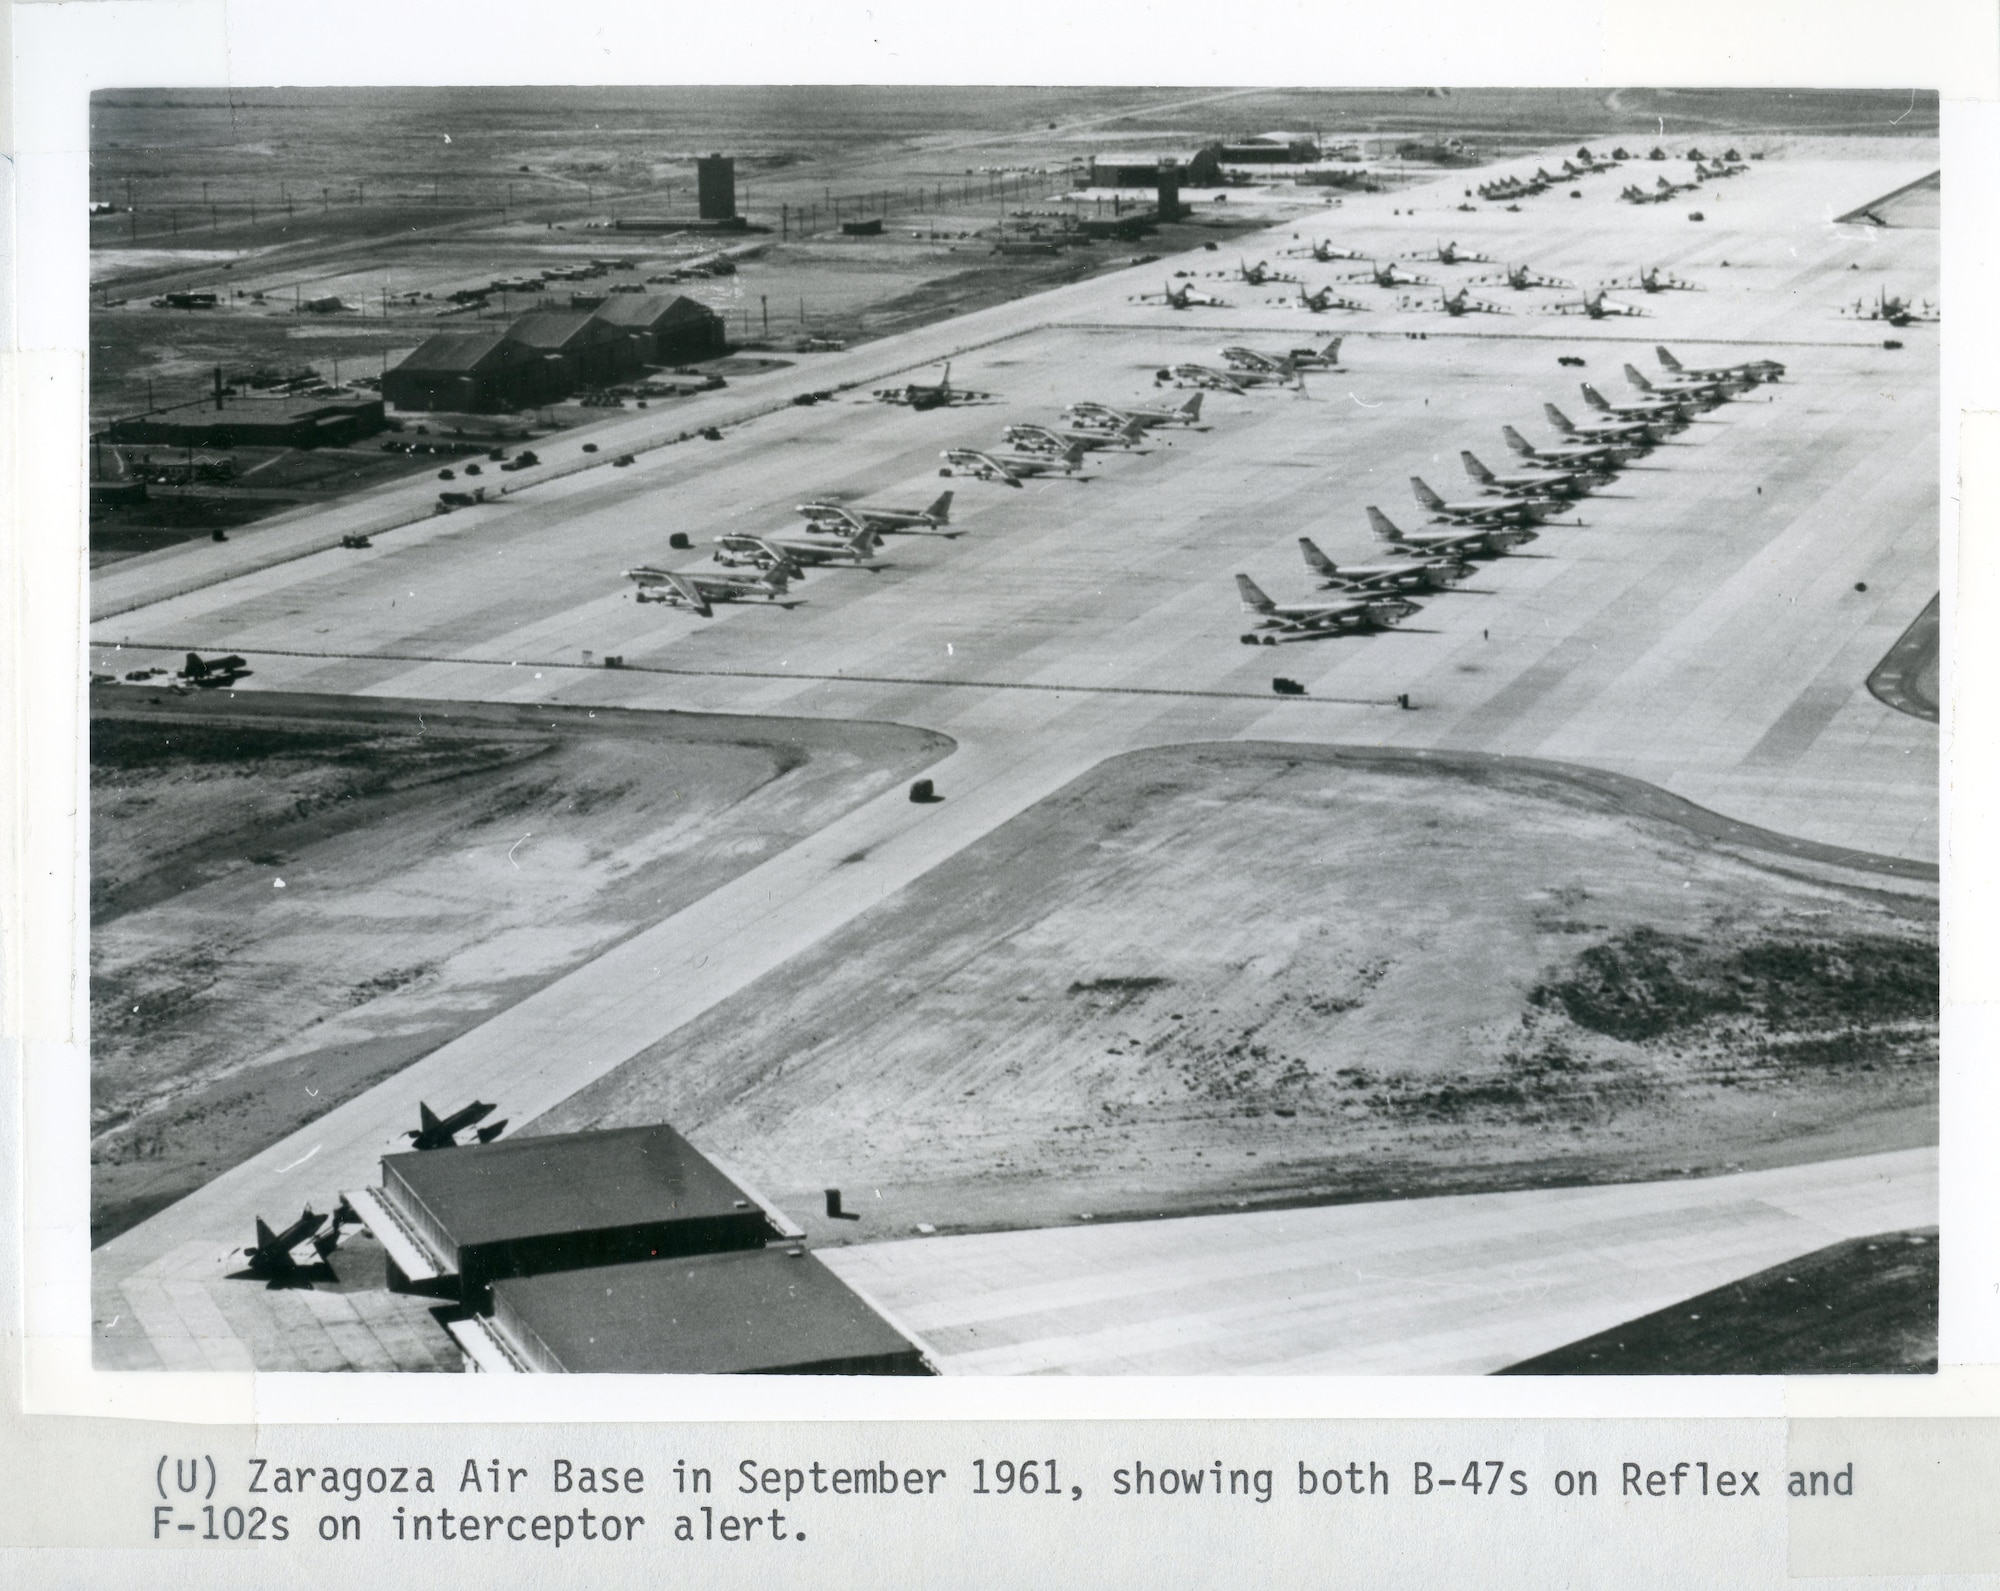 A photo of planes at an air base.